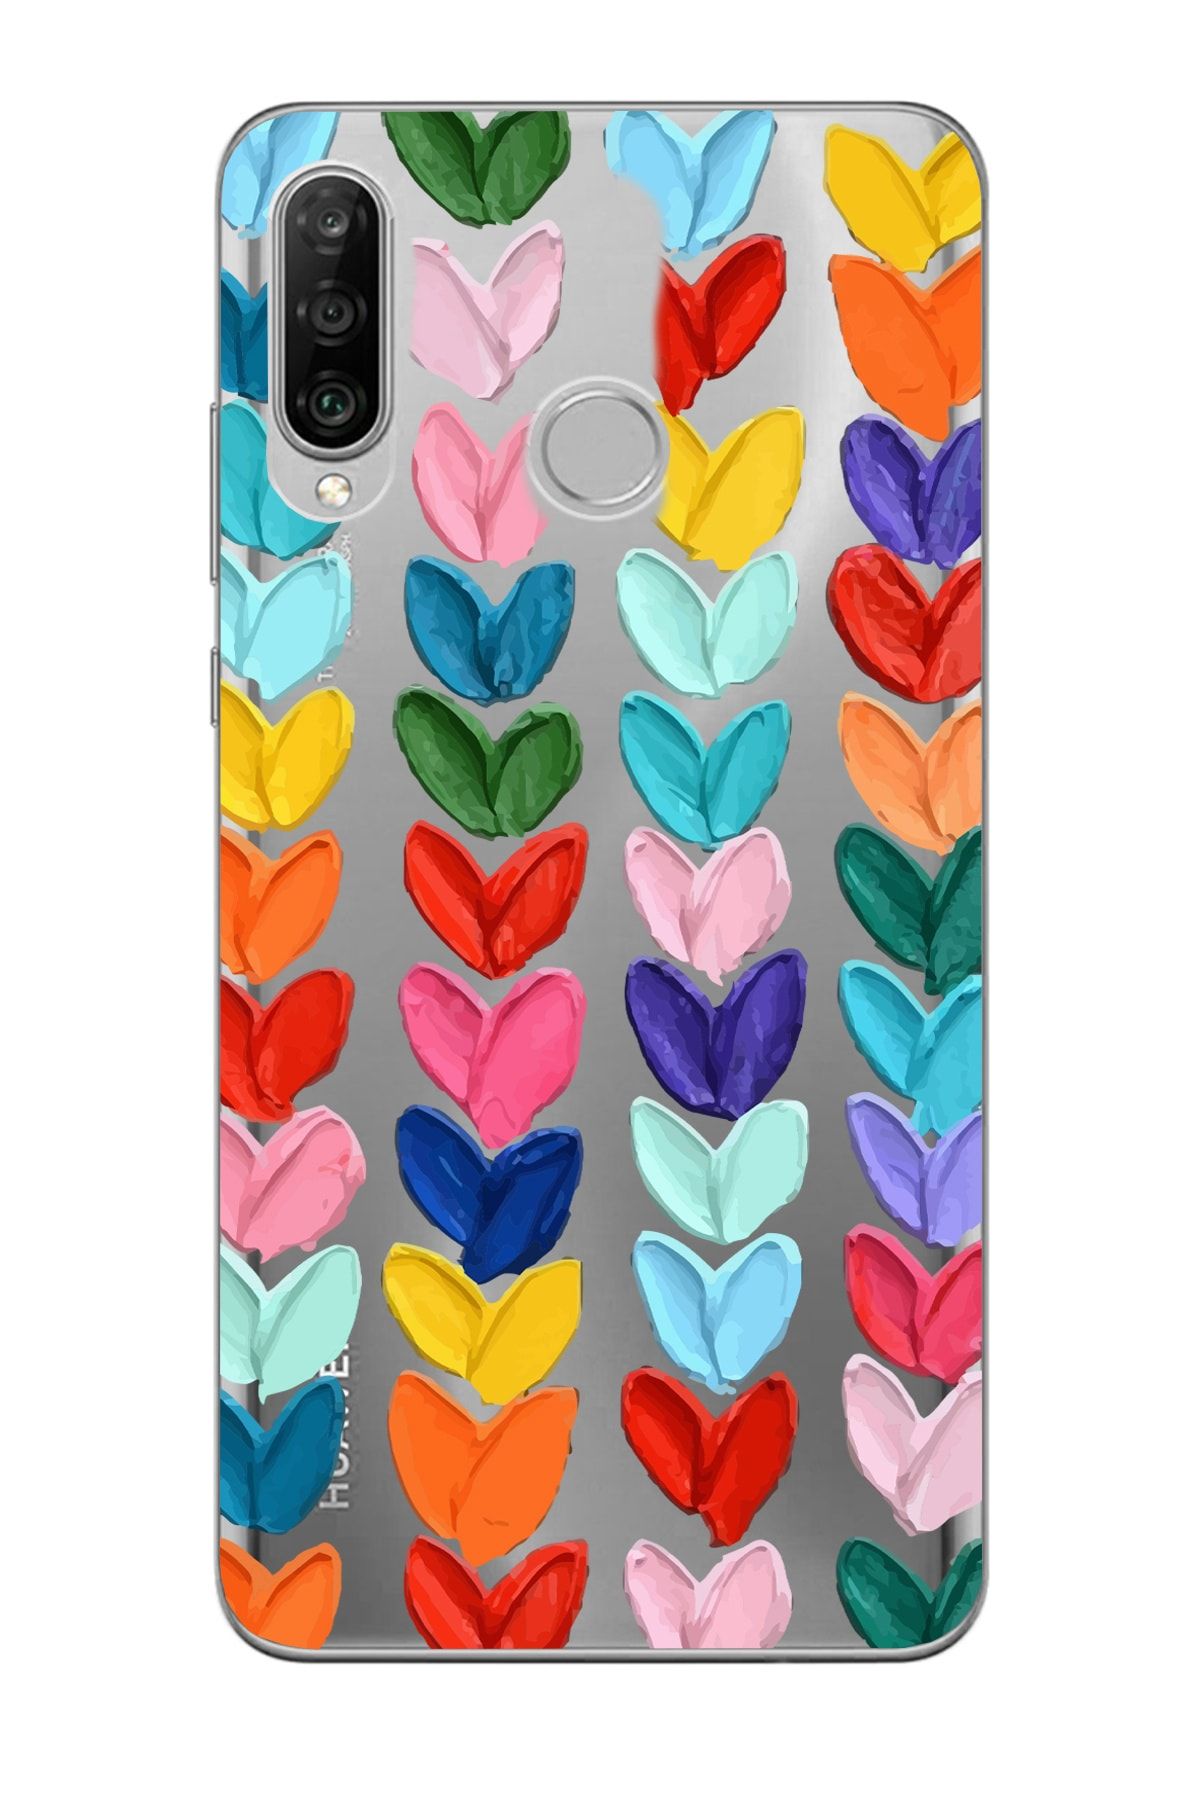 Merwish Huawei P30 Lite Uyumlu Şeffaf Kapak Renkli Kalpler Desenli Kılıf